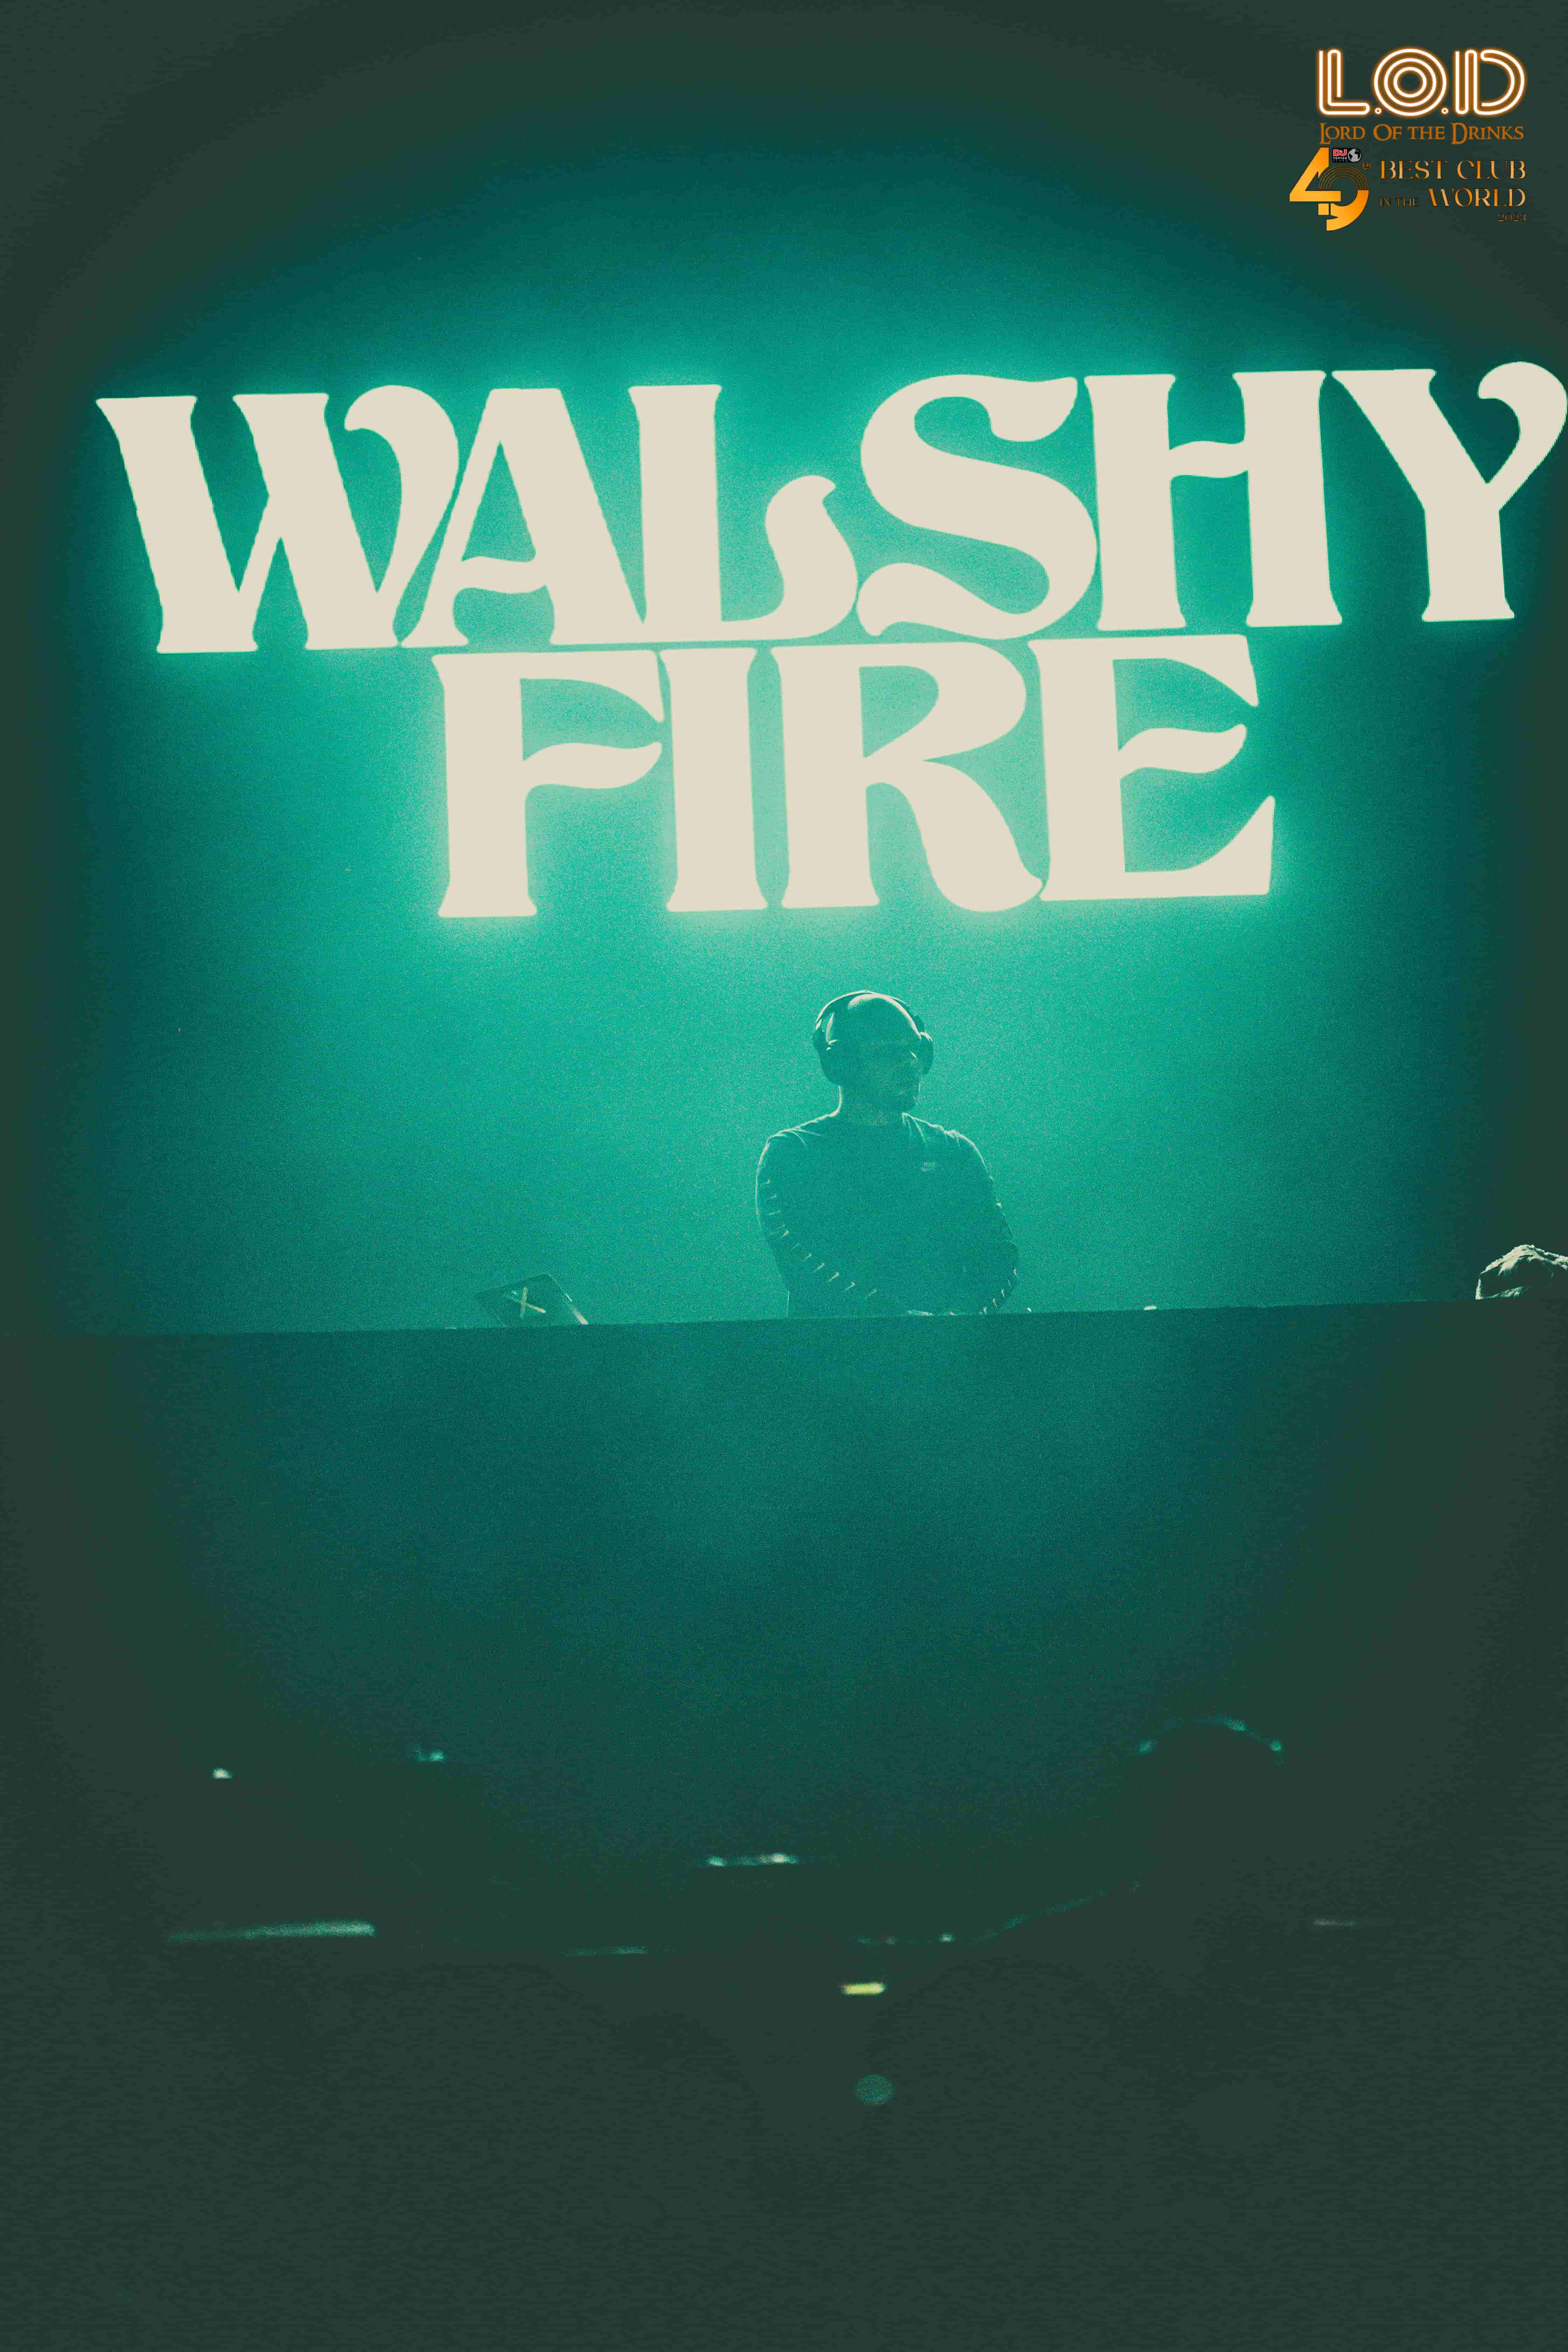 Wednesday Night February 21st [WALSHY FIRE]-65d834bba5f9f-6